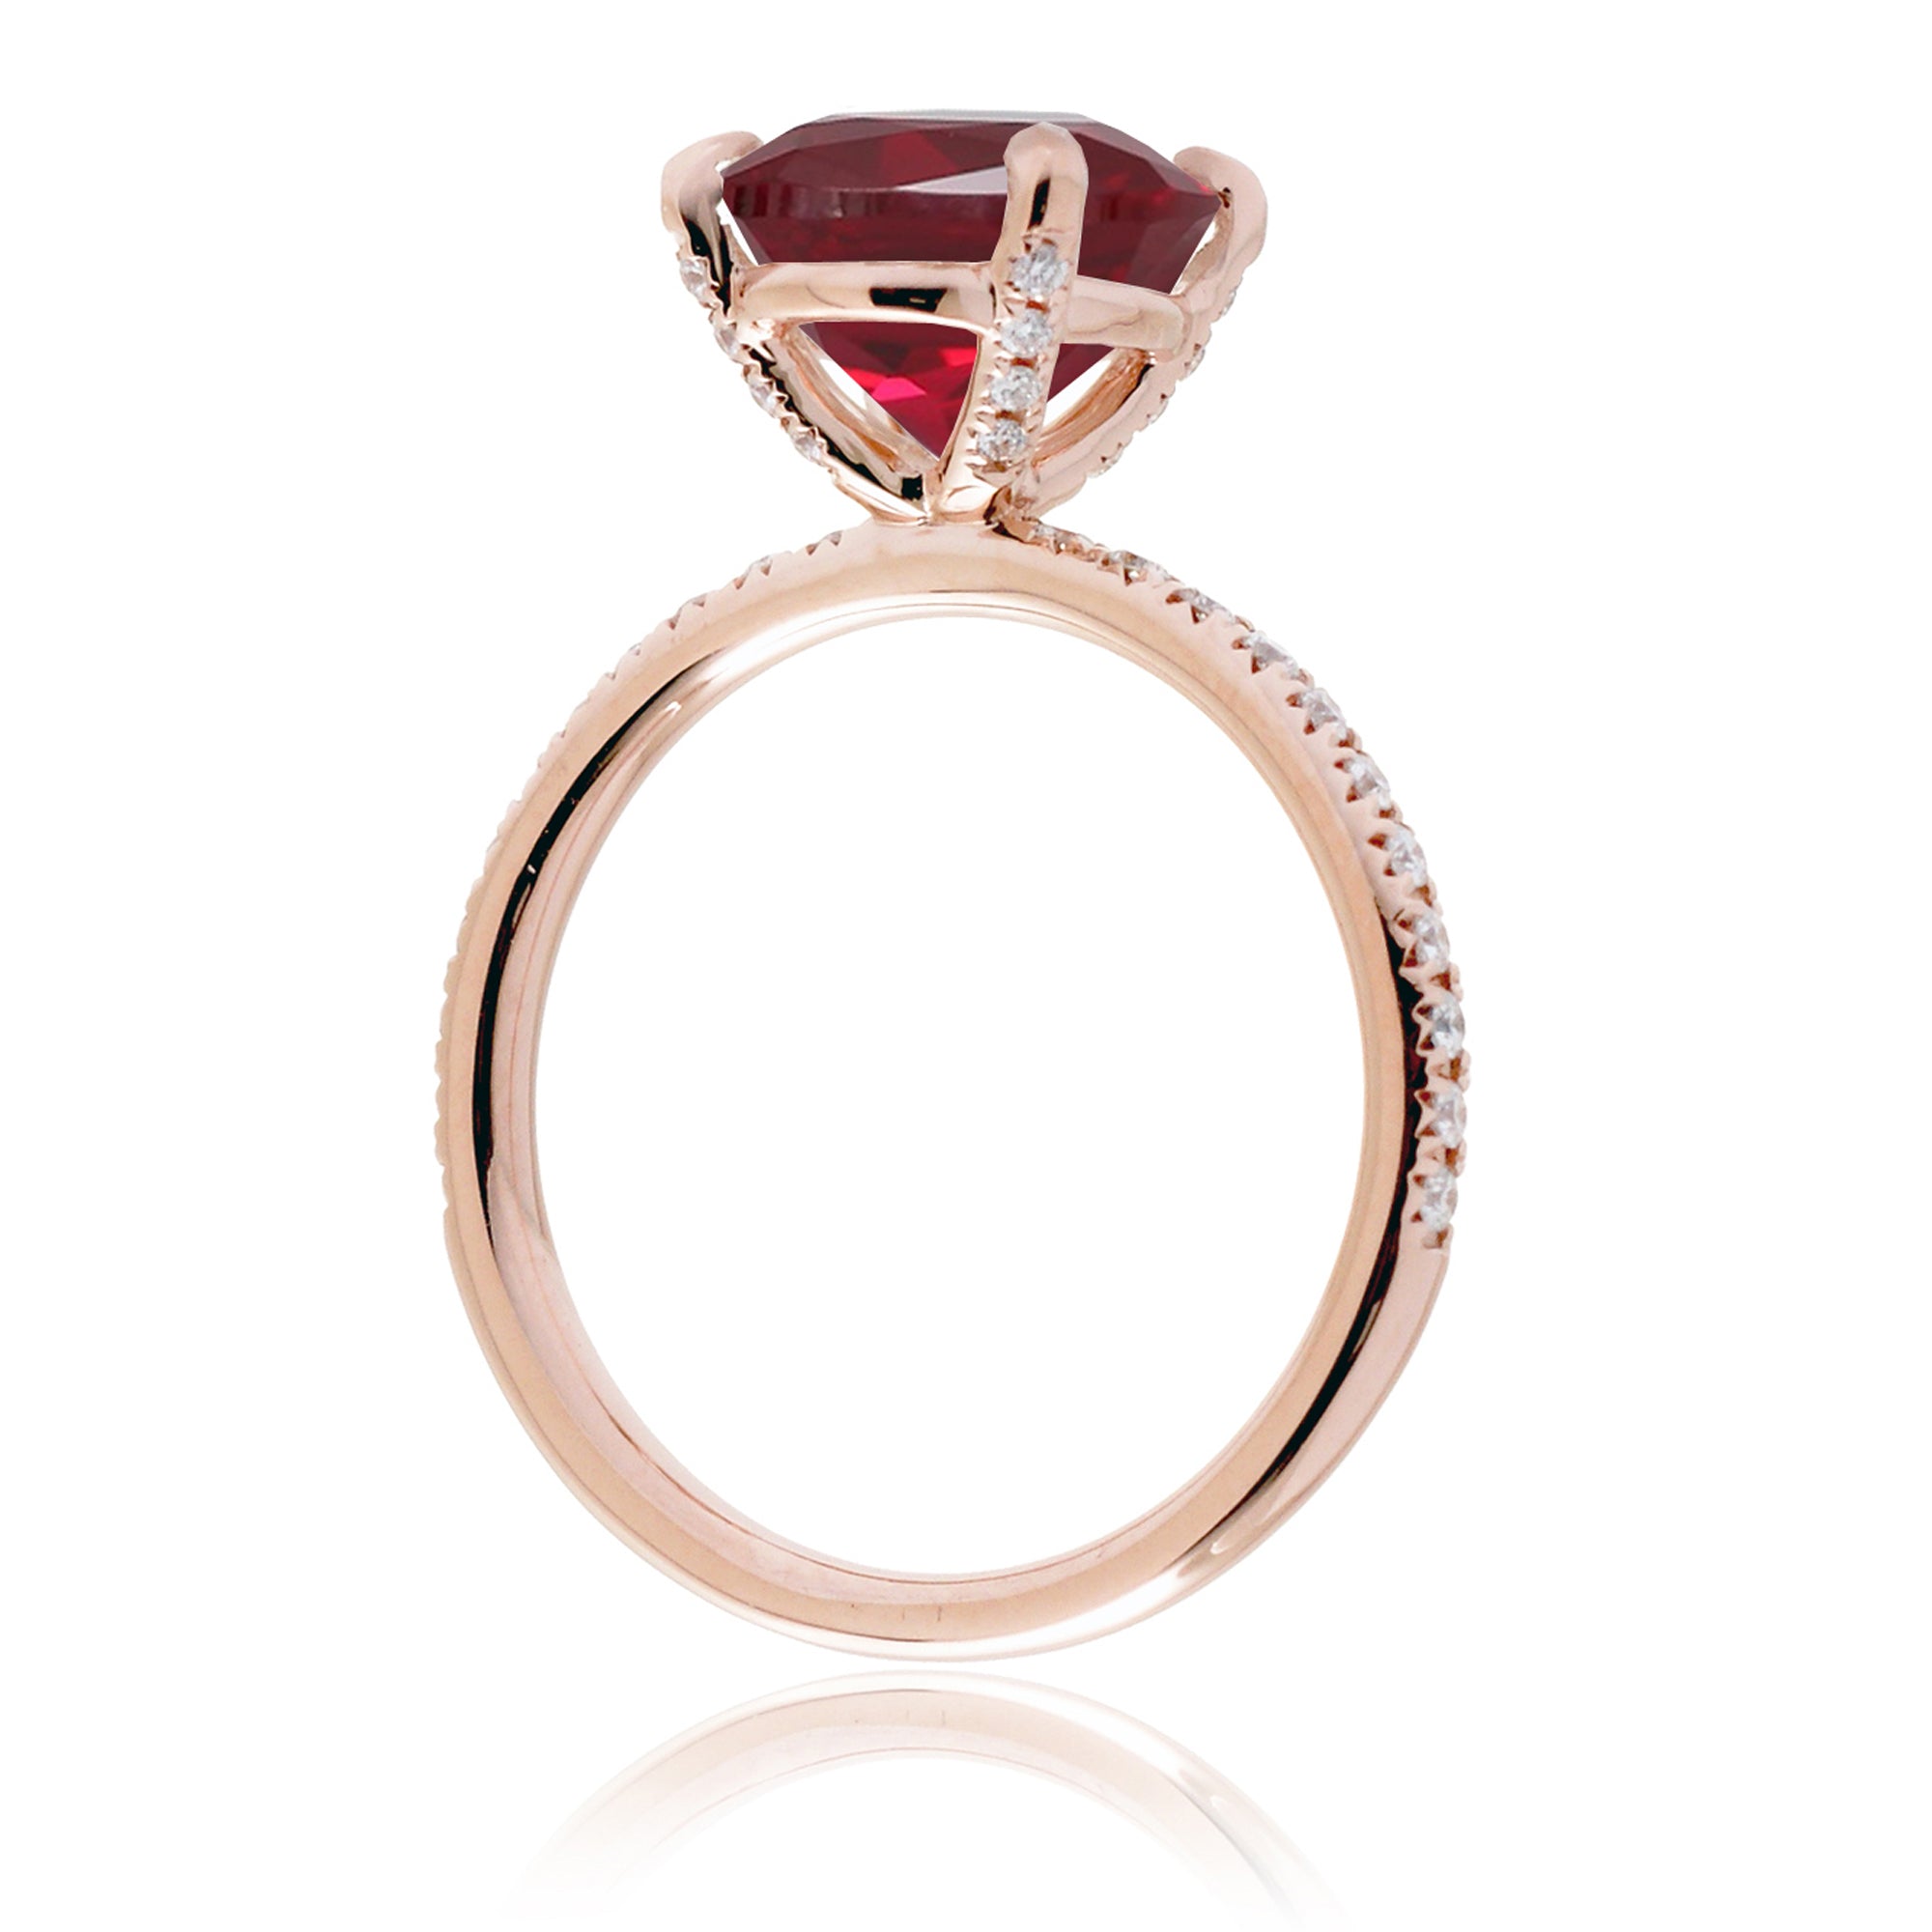 Cushion cut ruby diamond engagement ring rose gold - the Ava